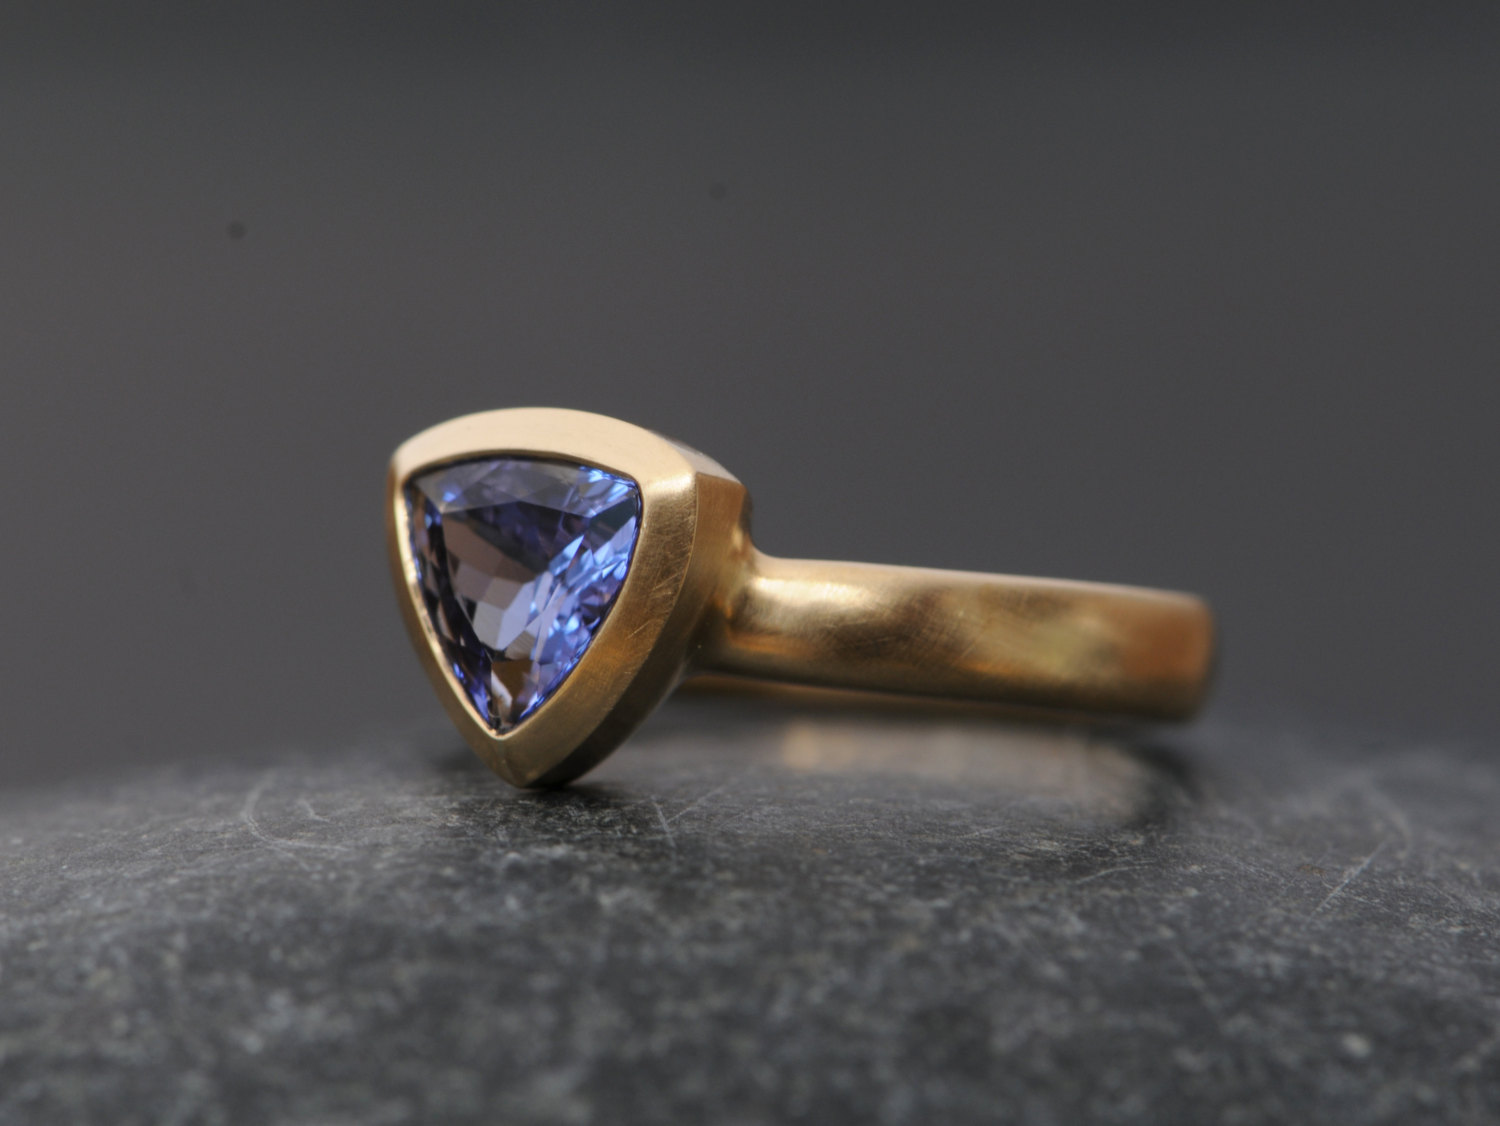 Purple blue trillion cut tanzanite set in 18k gold ring. By William White